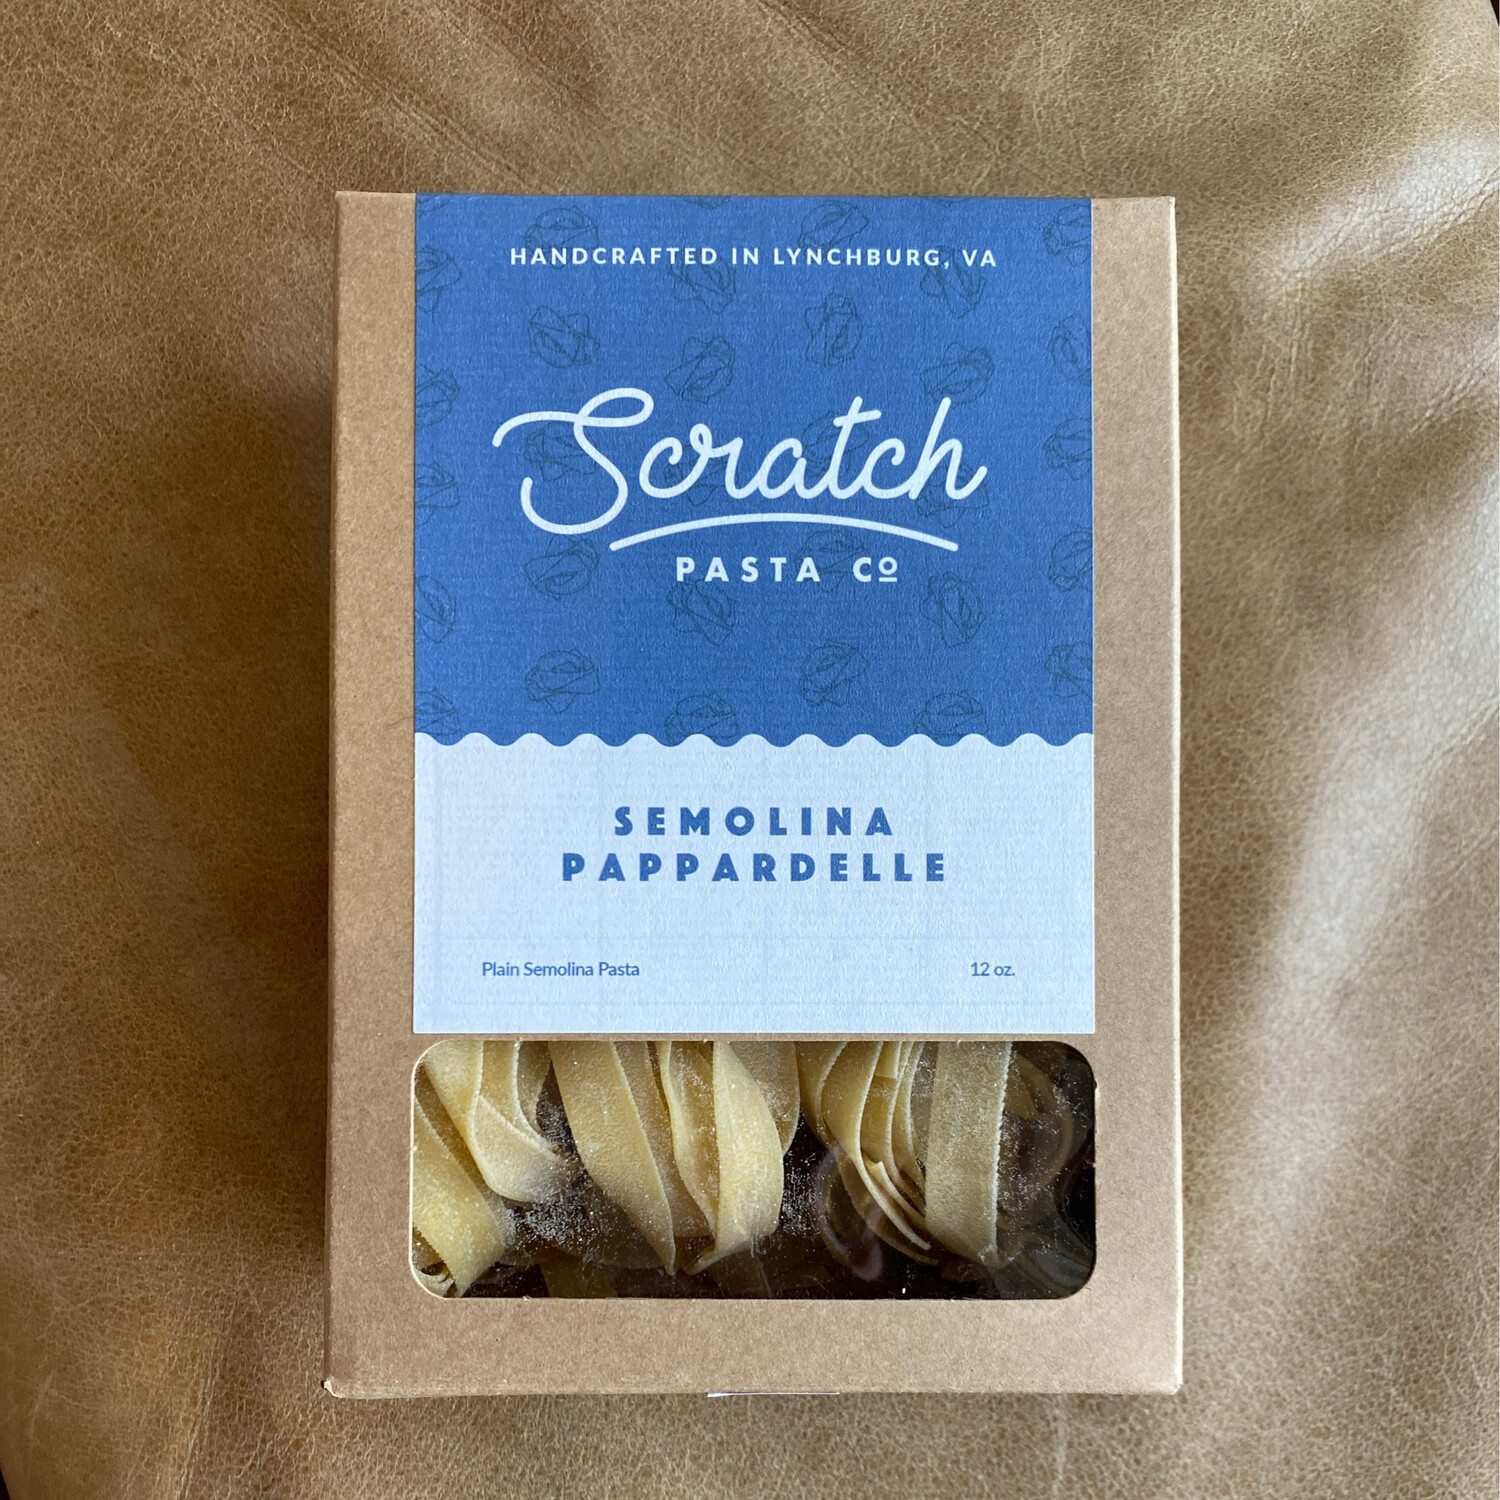 Scratch Pasta, Semolina Pappardelle